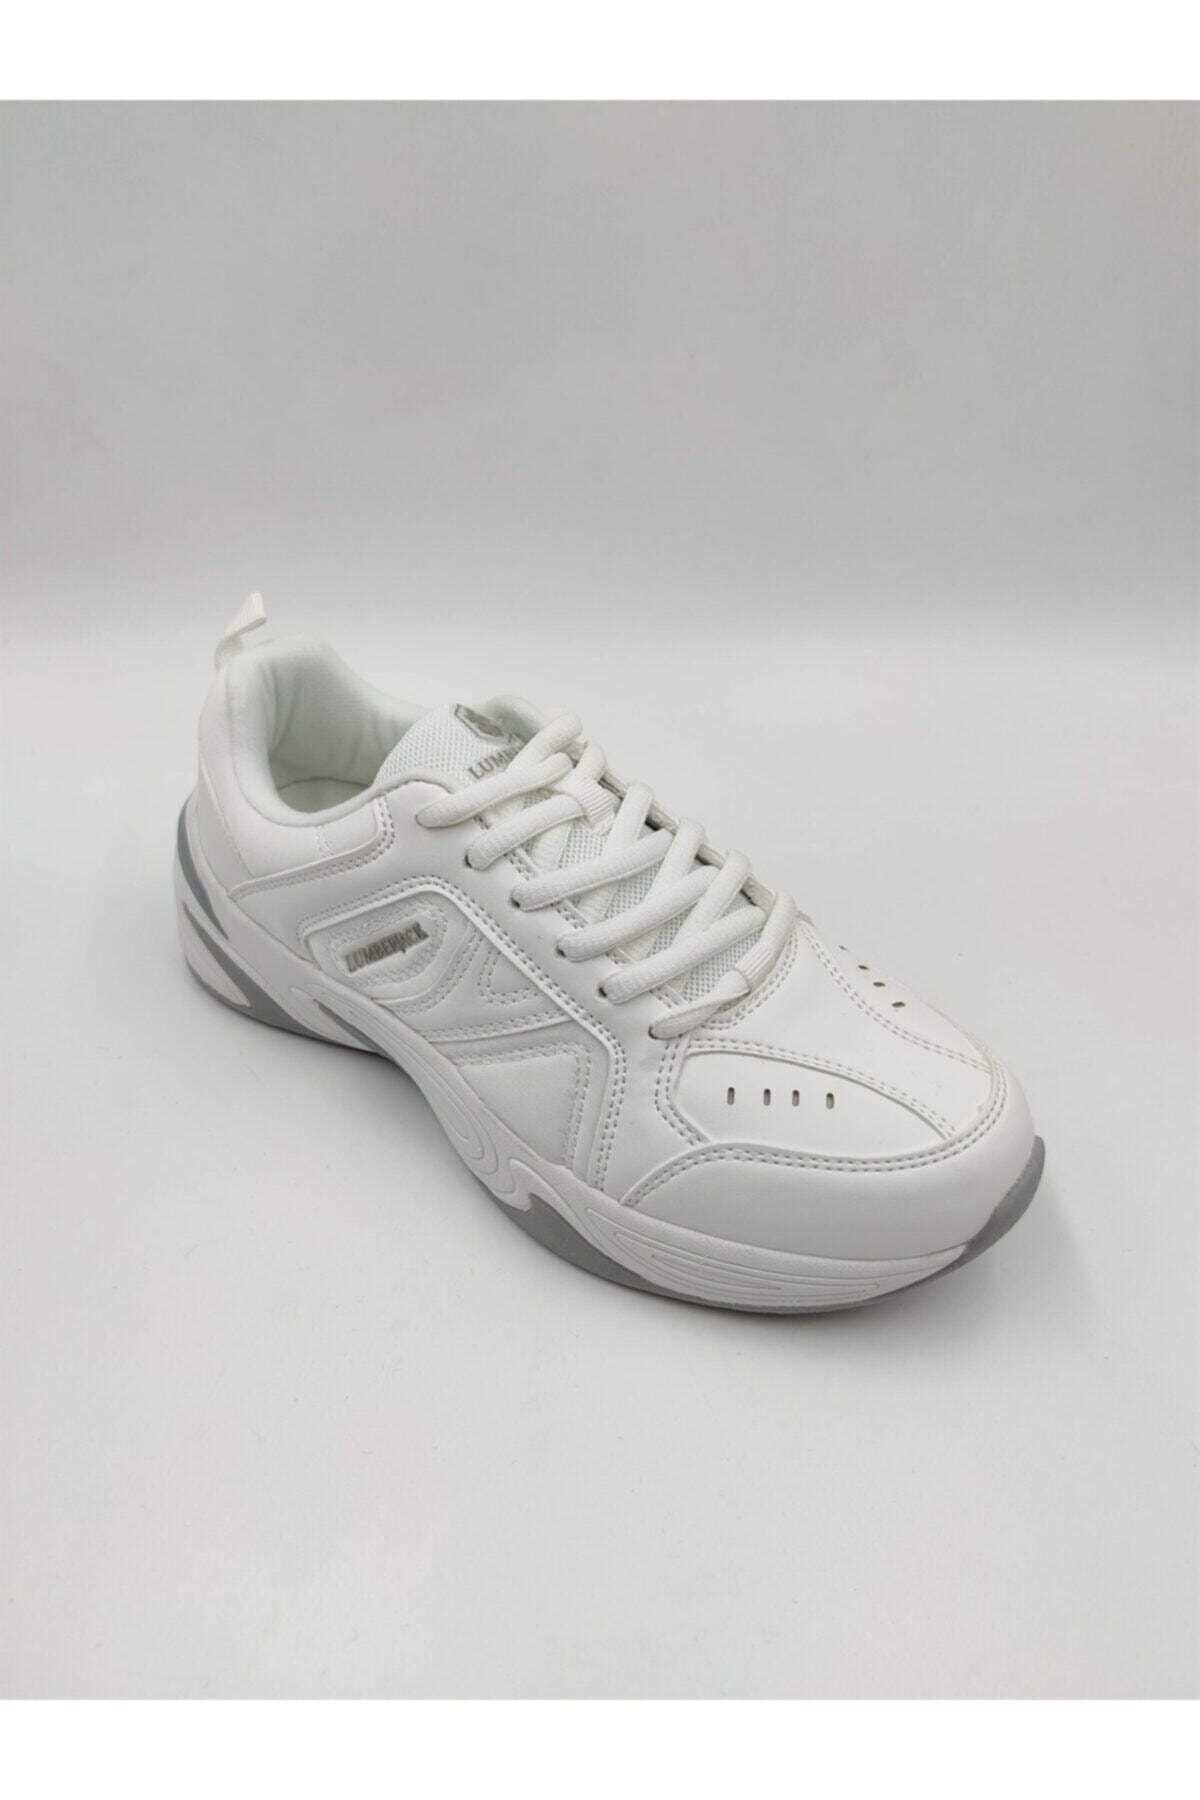 فروش انلاین کفش اسپرت زنانه شیک lumberjack رنگ سفید ty7074255